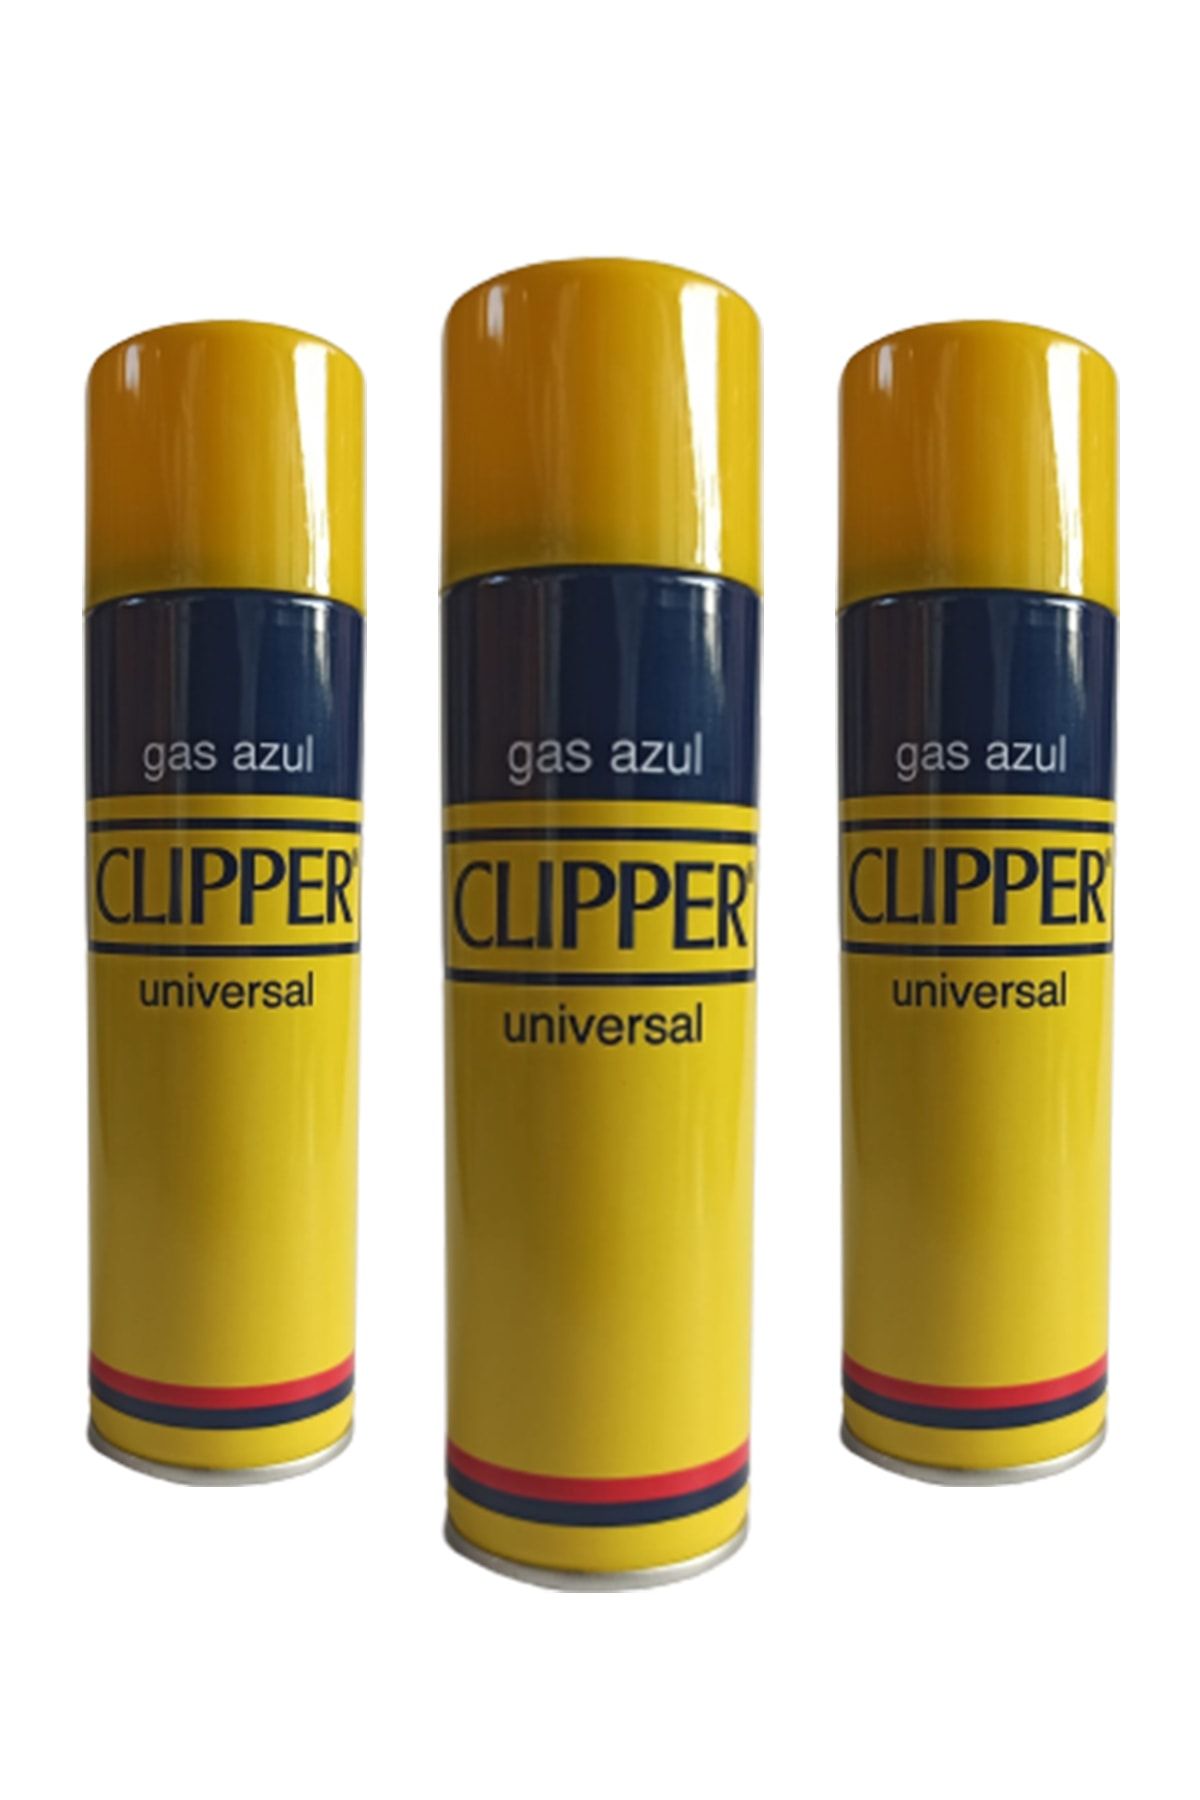 Clipper Çakmak Gazı (250ml) 3'lü